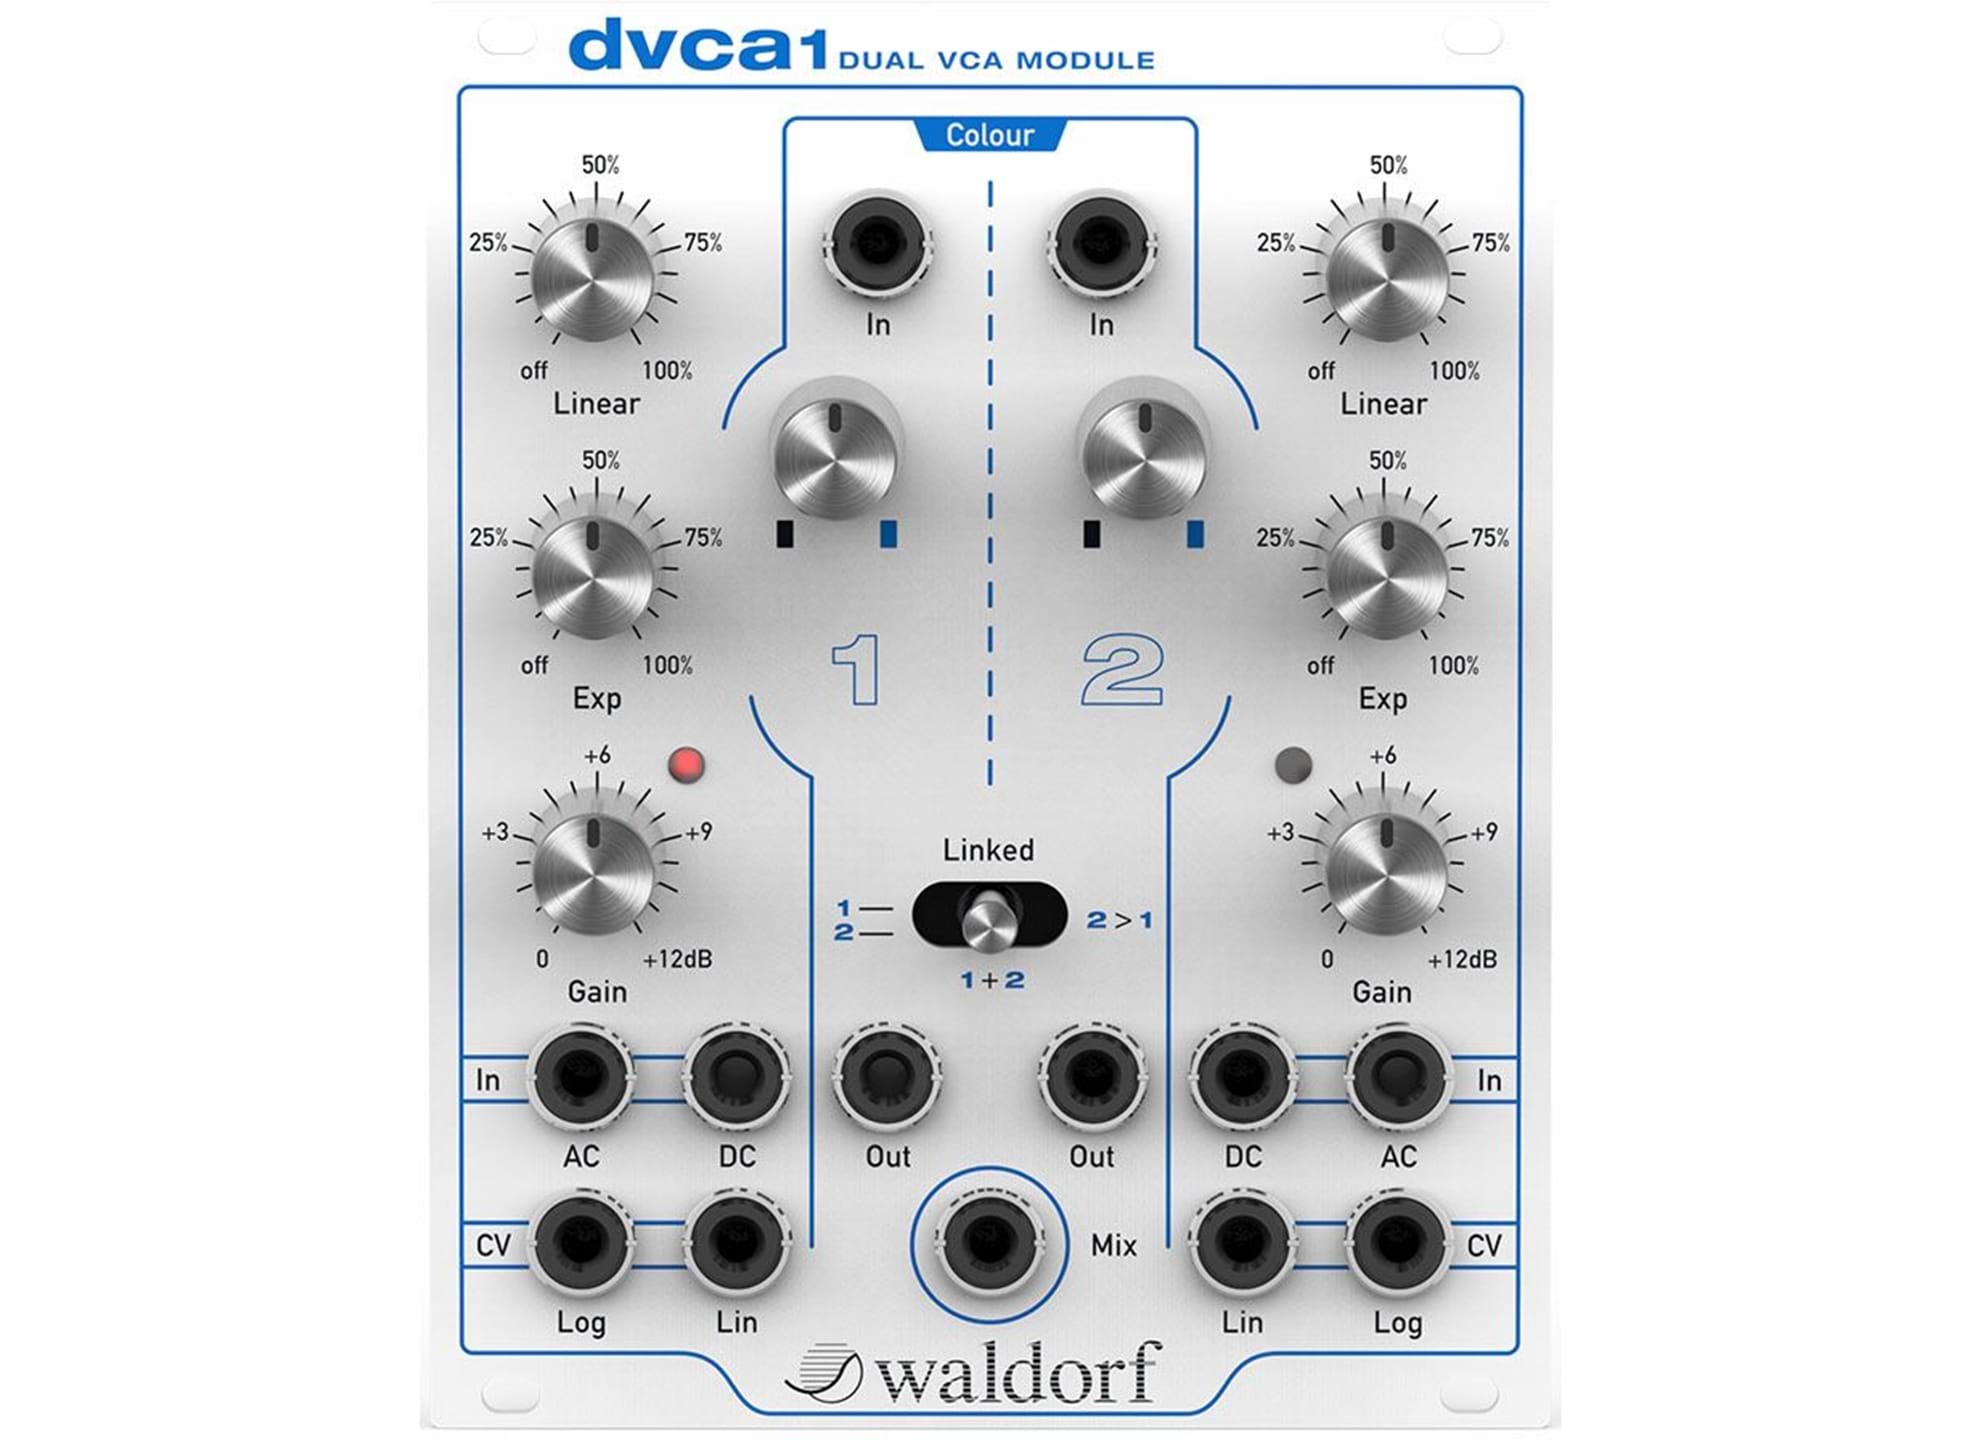 dvca1 Dual VCA Module